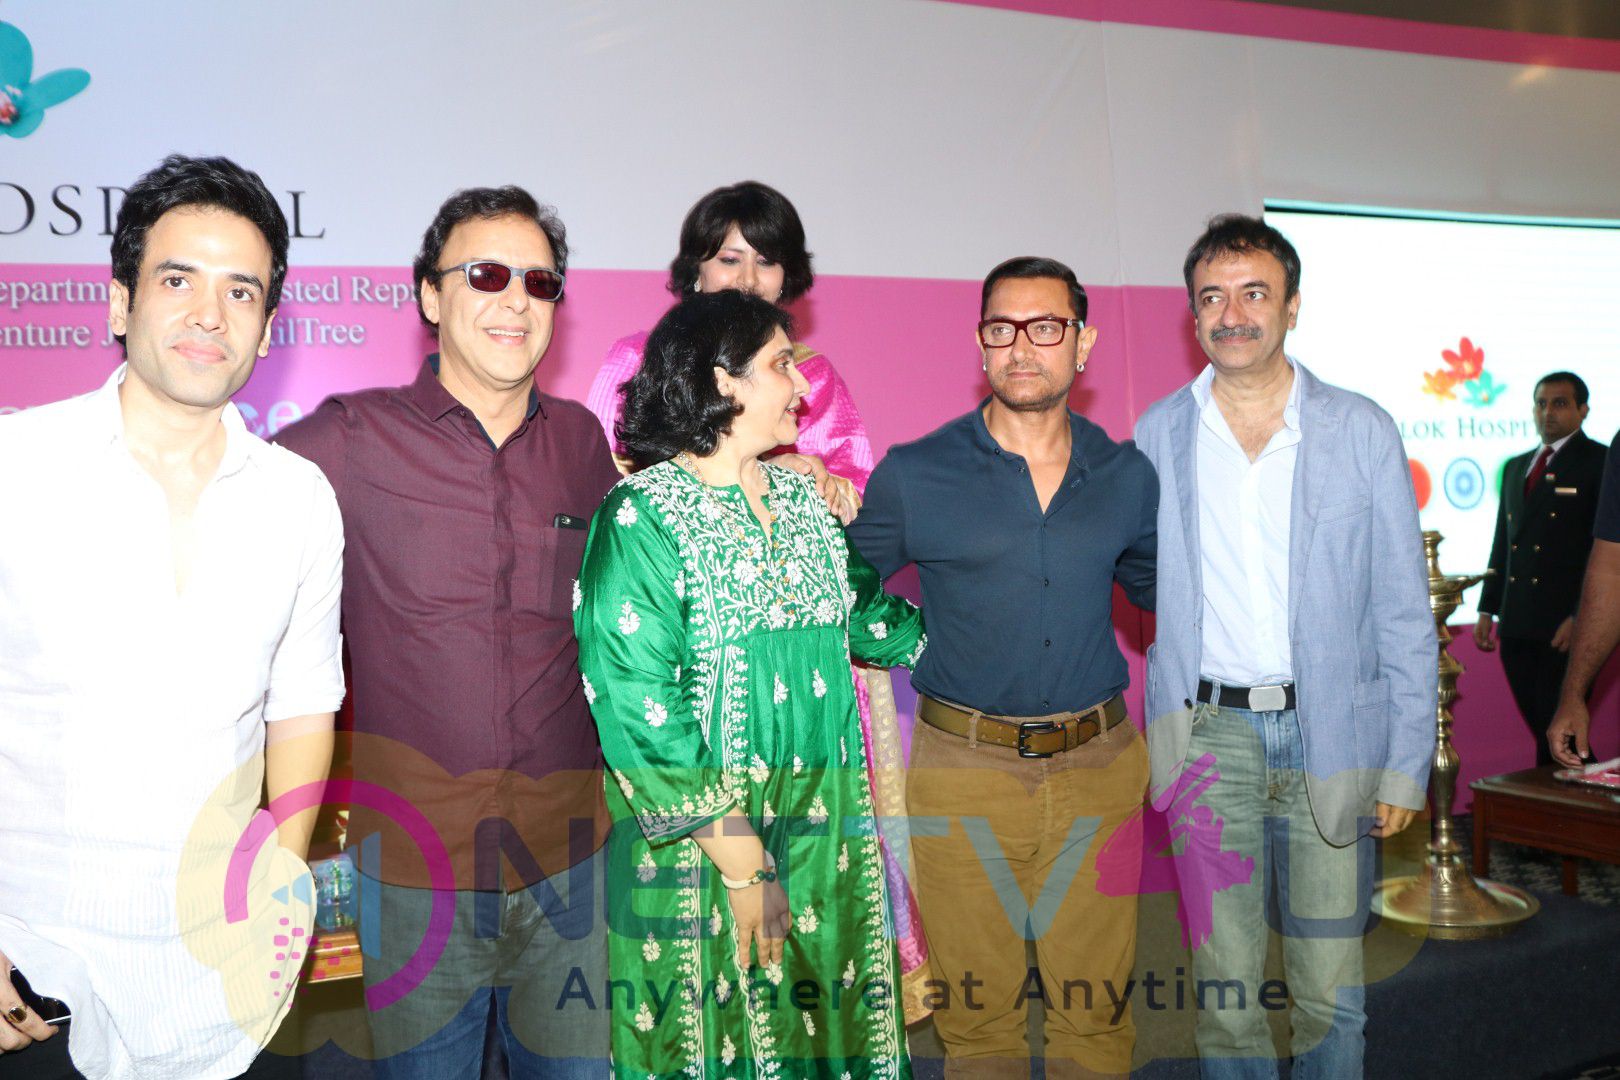 Jaslok Hospital Launch New Wing Jaslok Fertiltree With Aamir Khan Photos Hindi Gallery